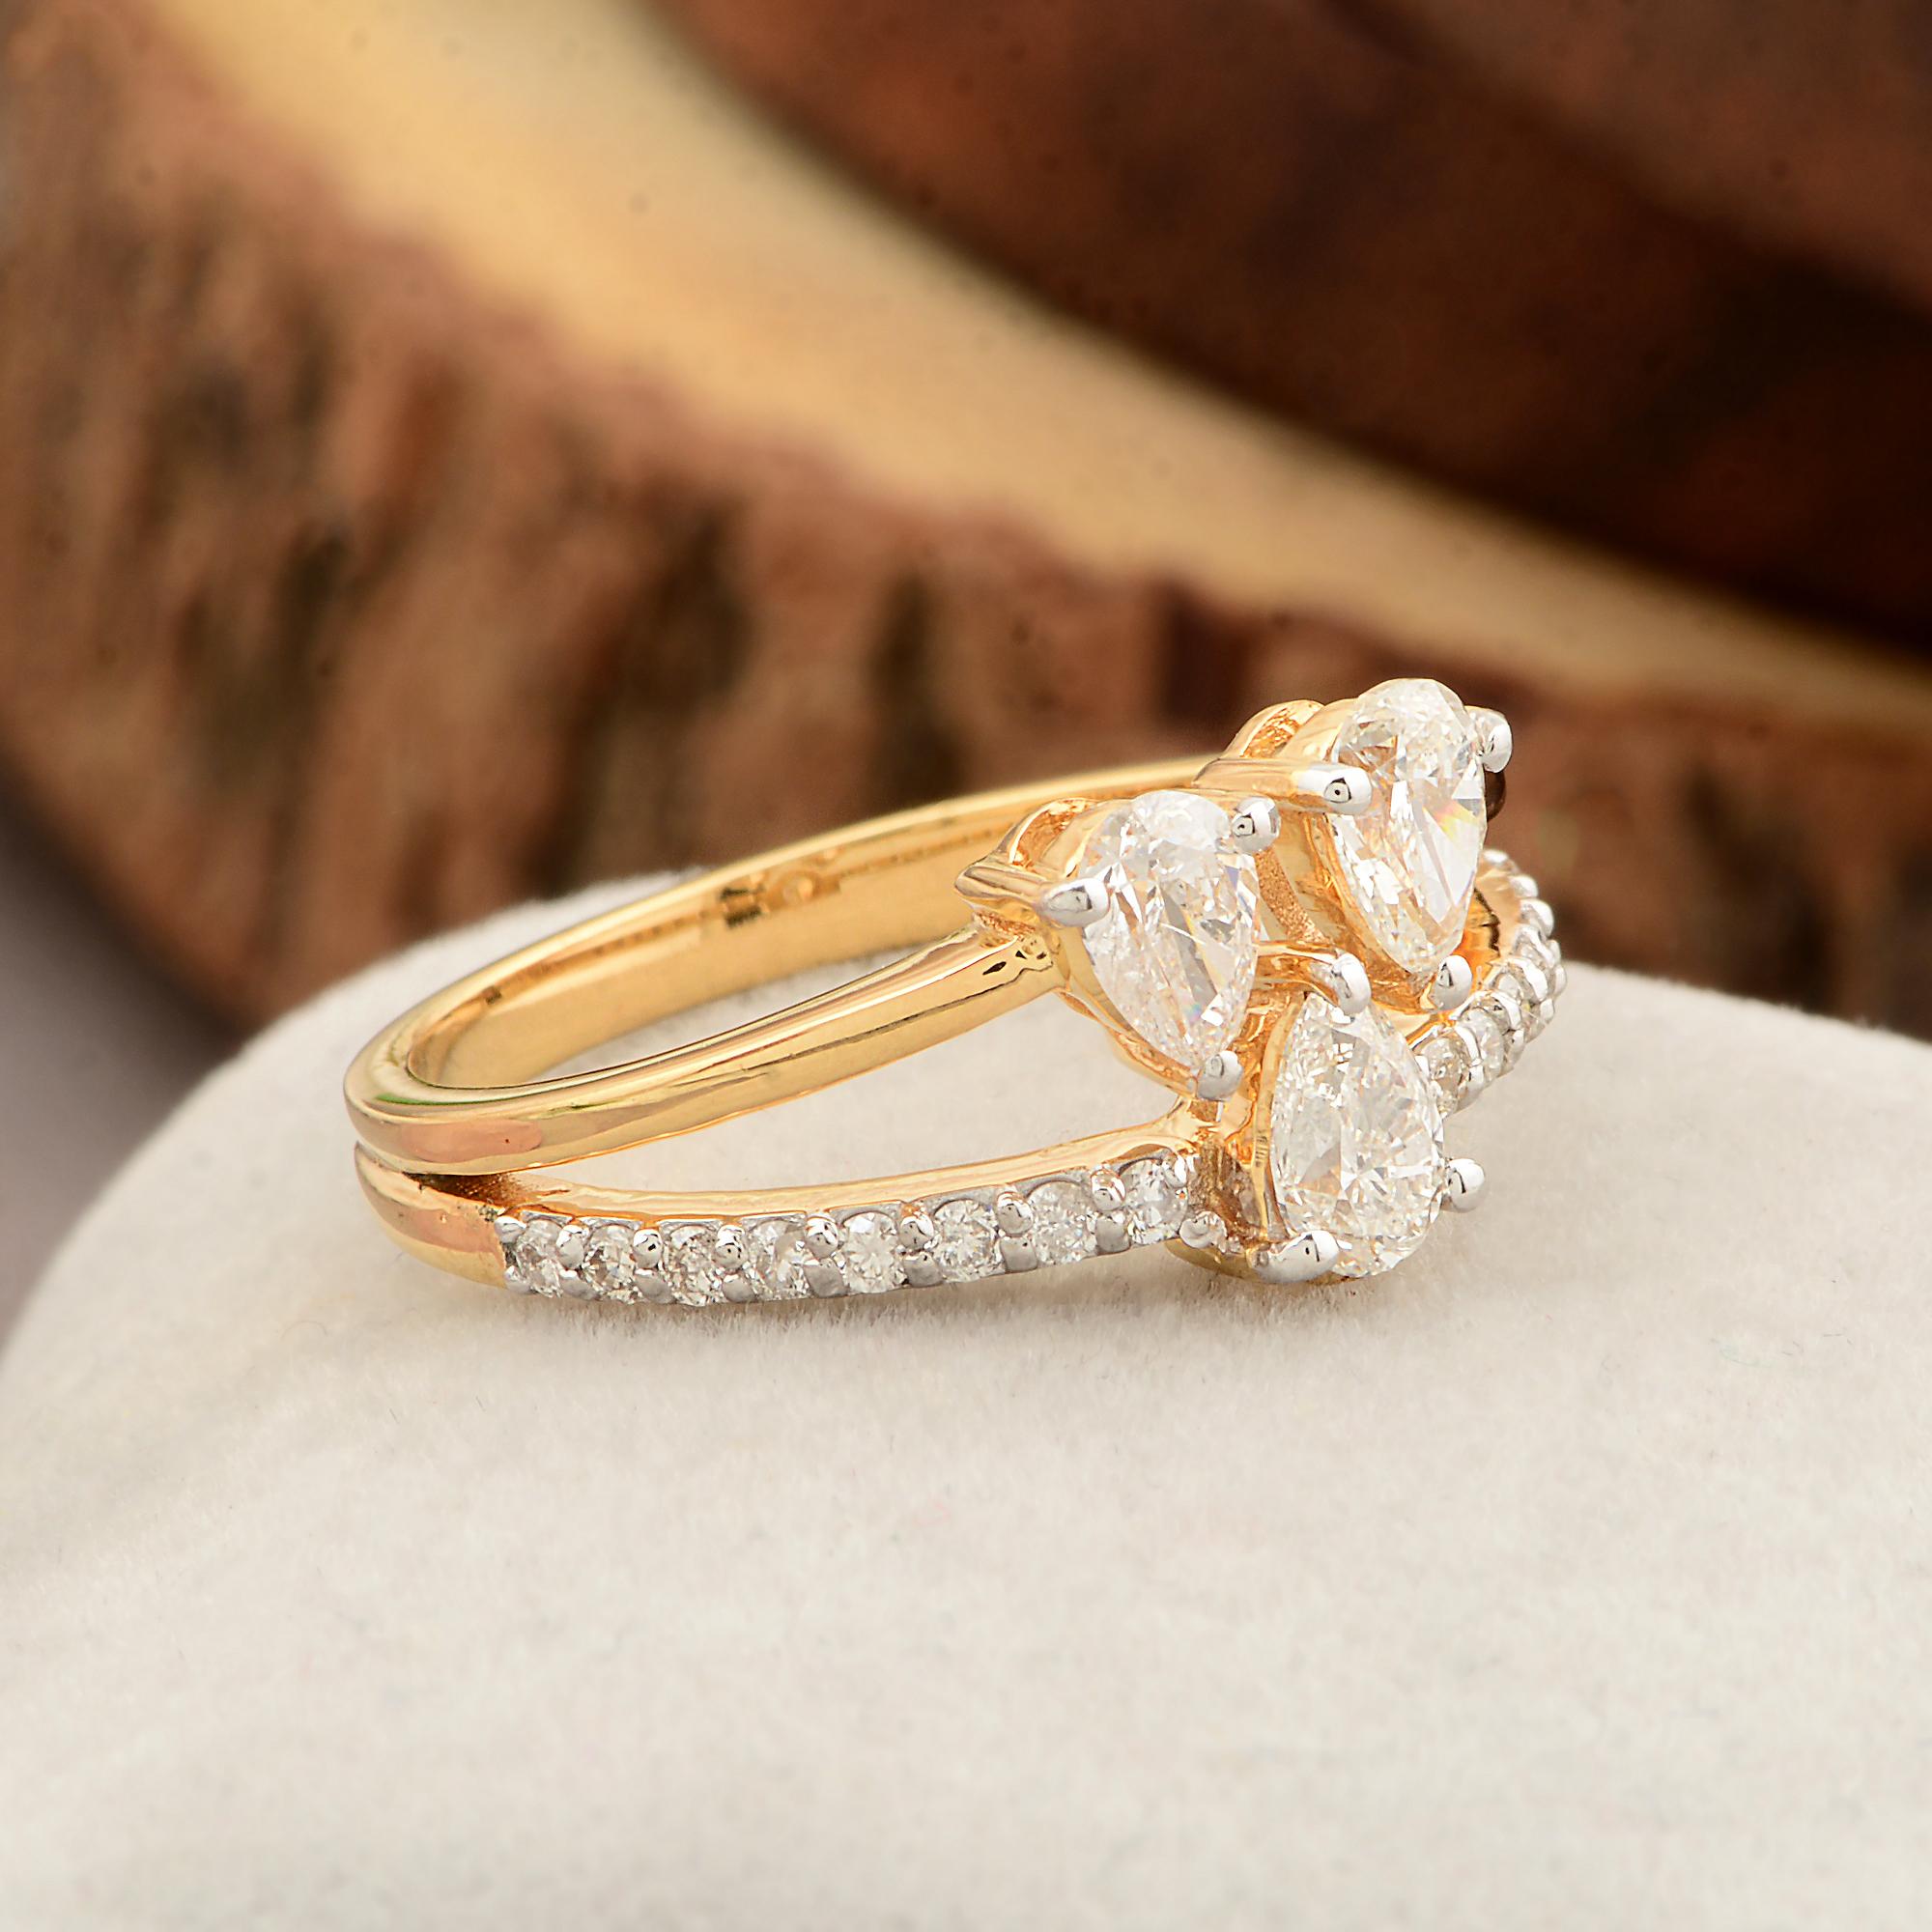 Pear Cut Real 0.90 Carat Pear Diamond Wedding Ring Solid 18k Yellow Gold Handmade Jewelry